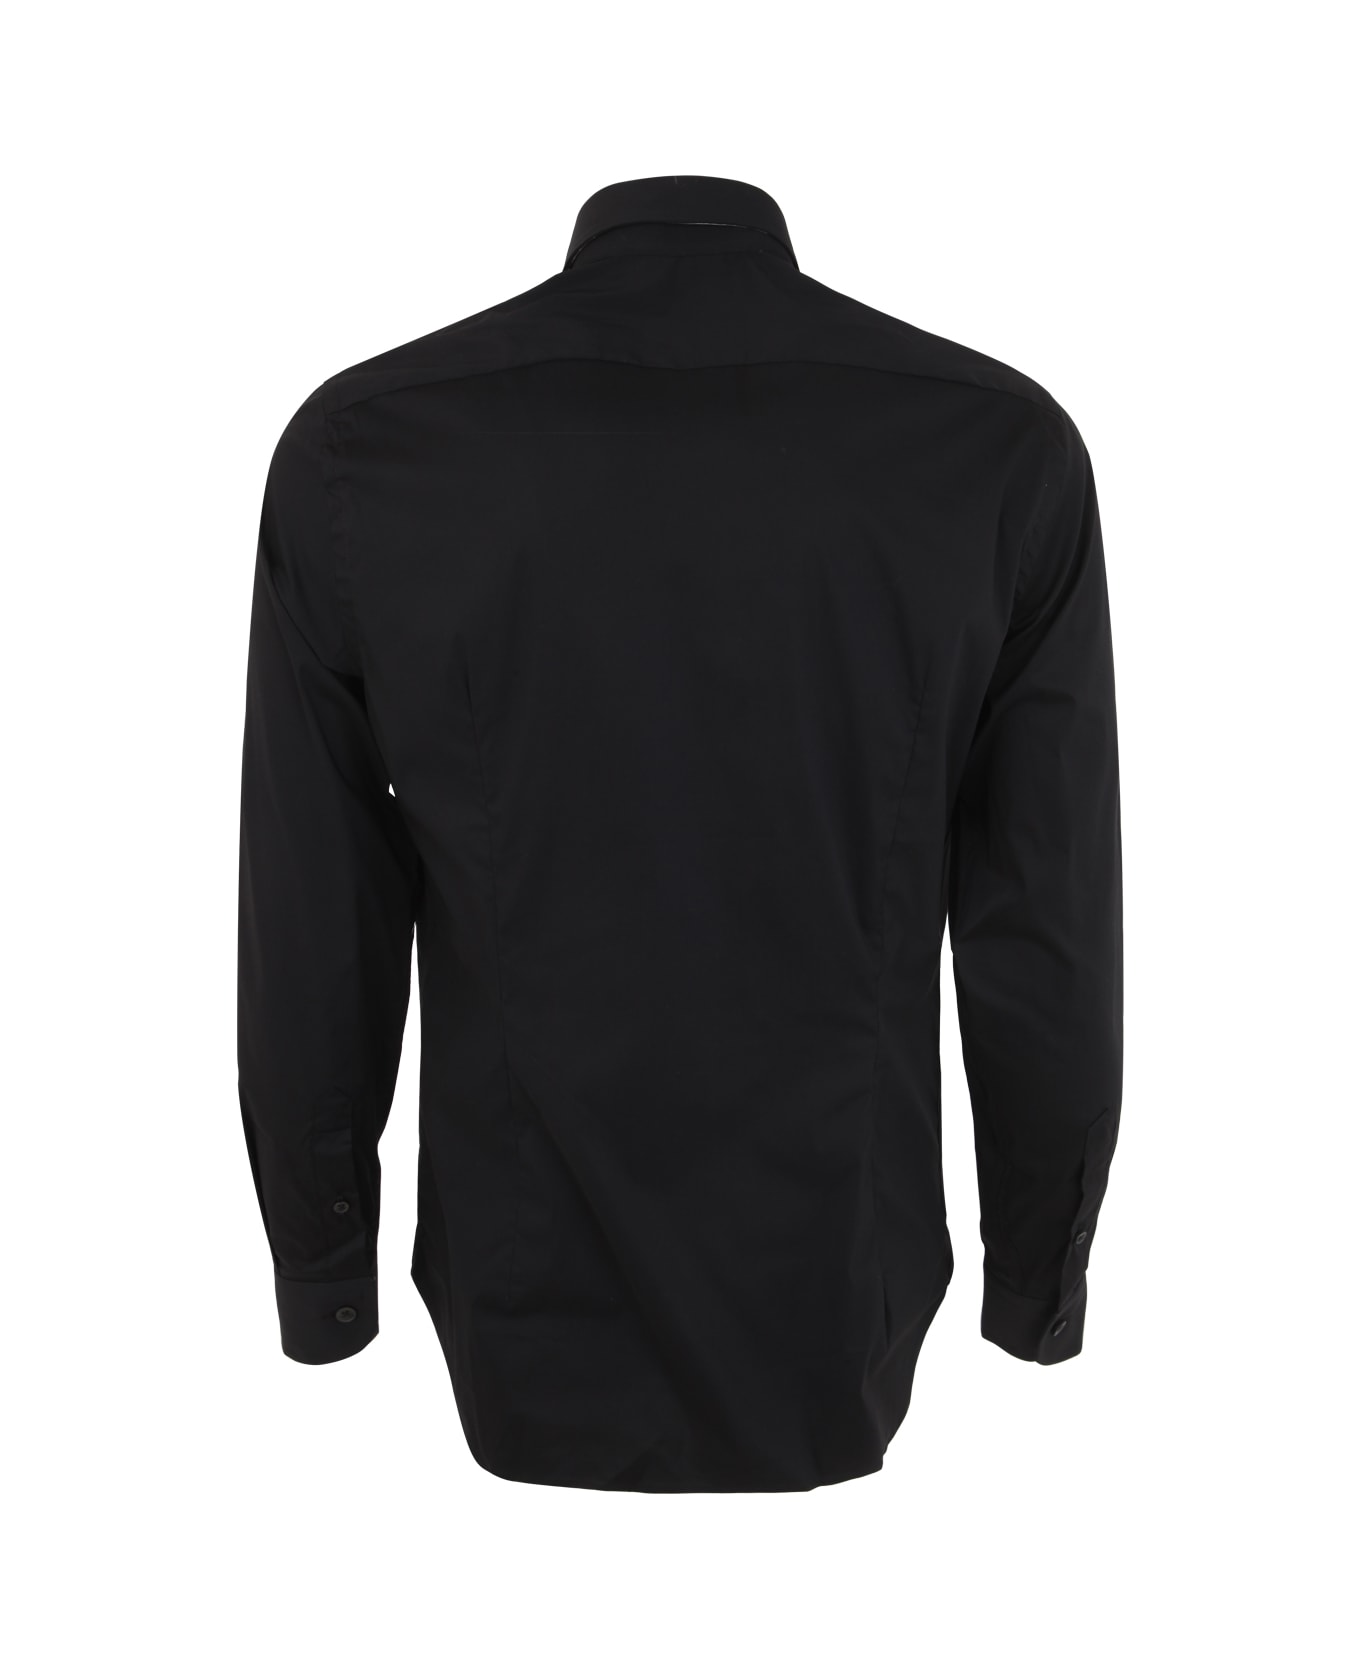 DNL Slim Shirt - Black